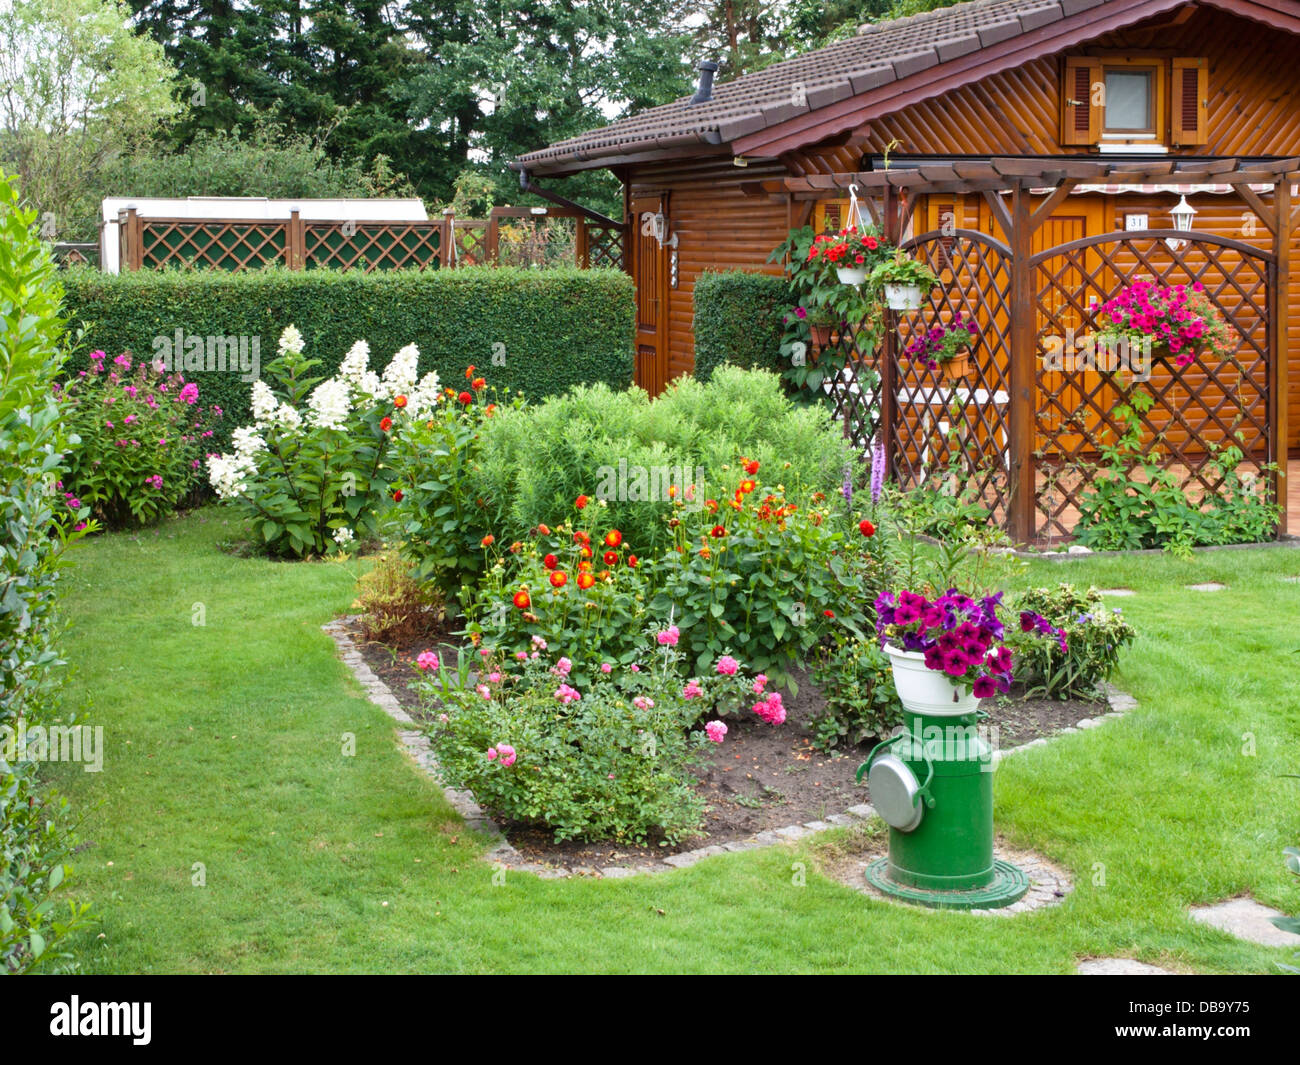 Wooden garden house and flower beds in an allotment garden Stock Photo